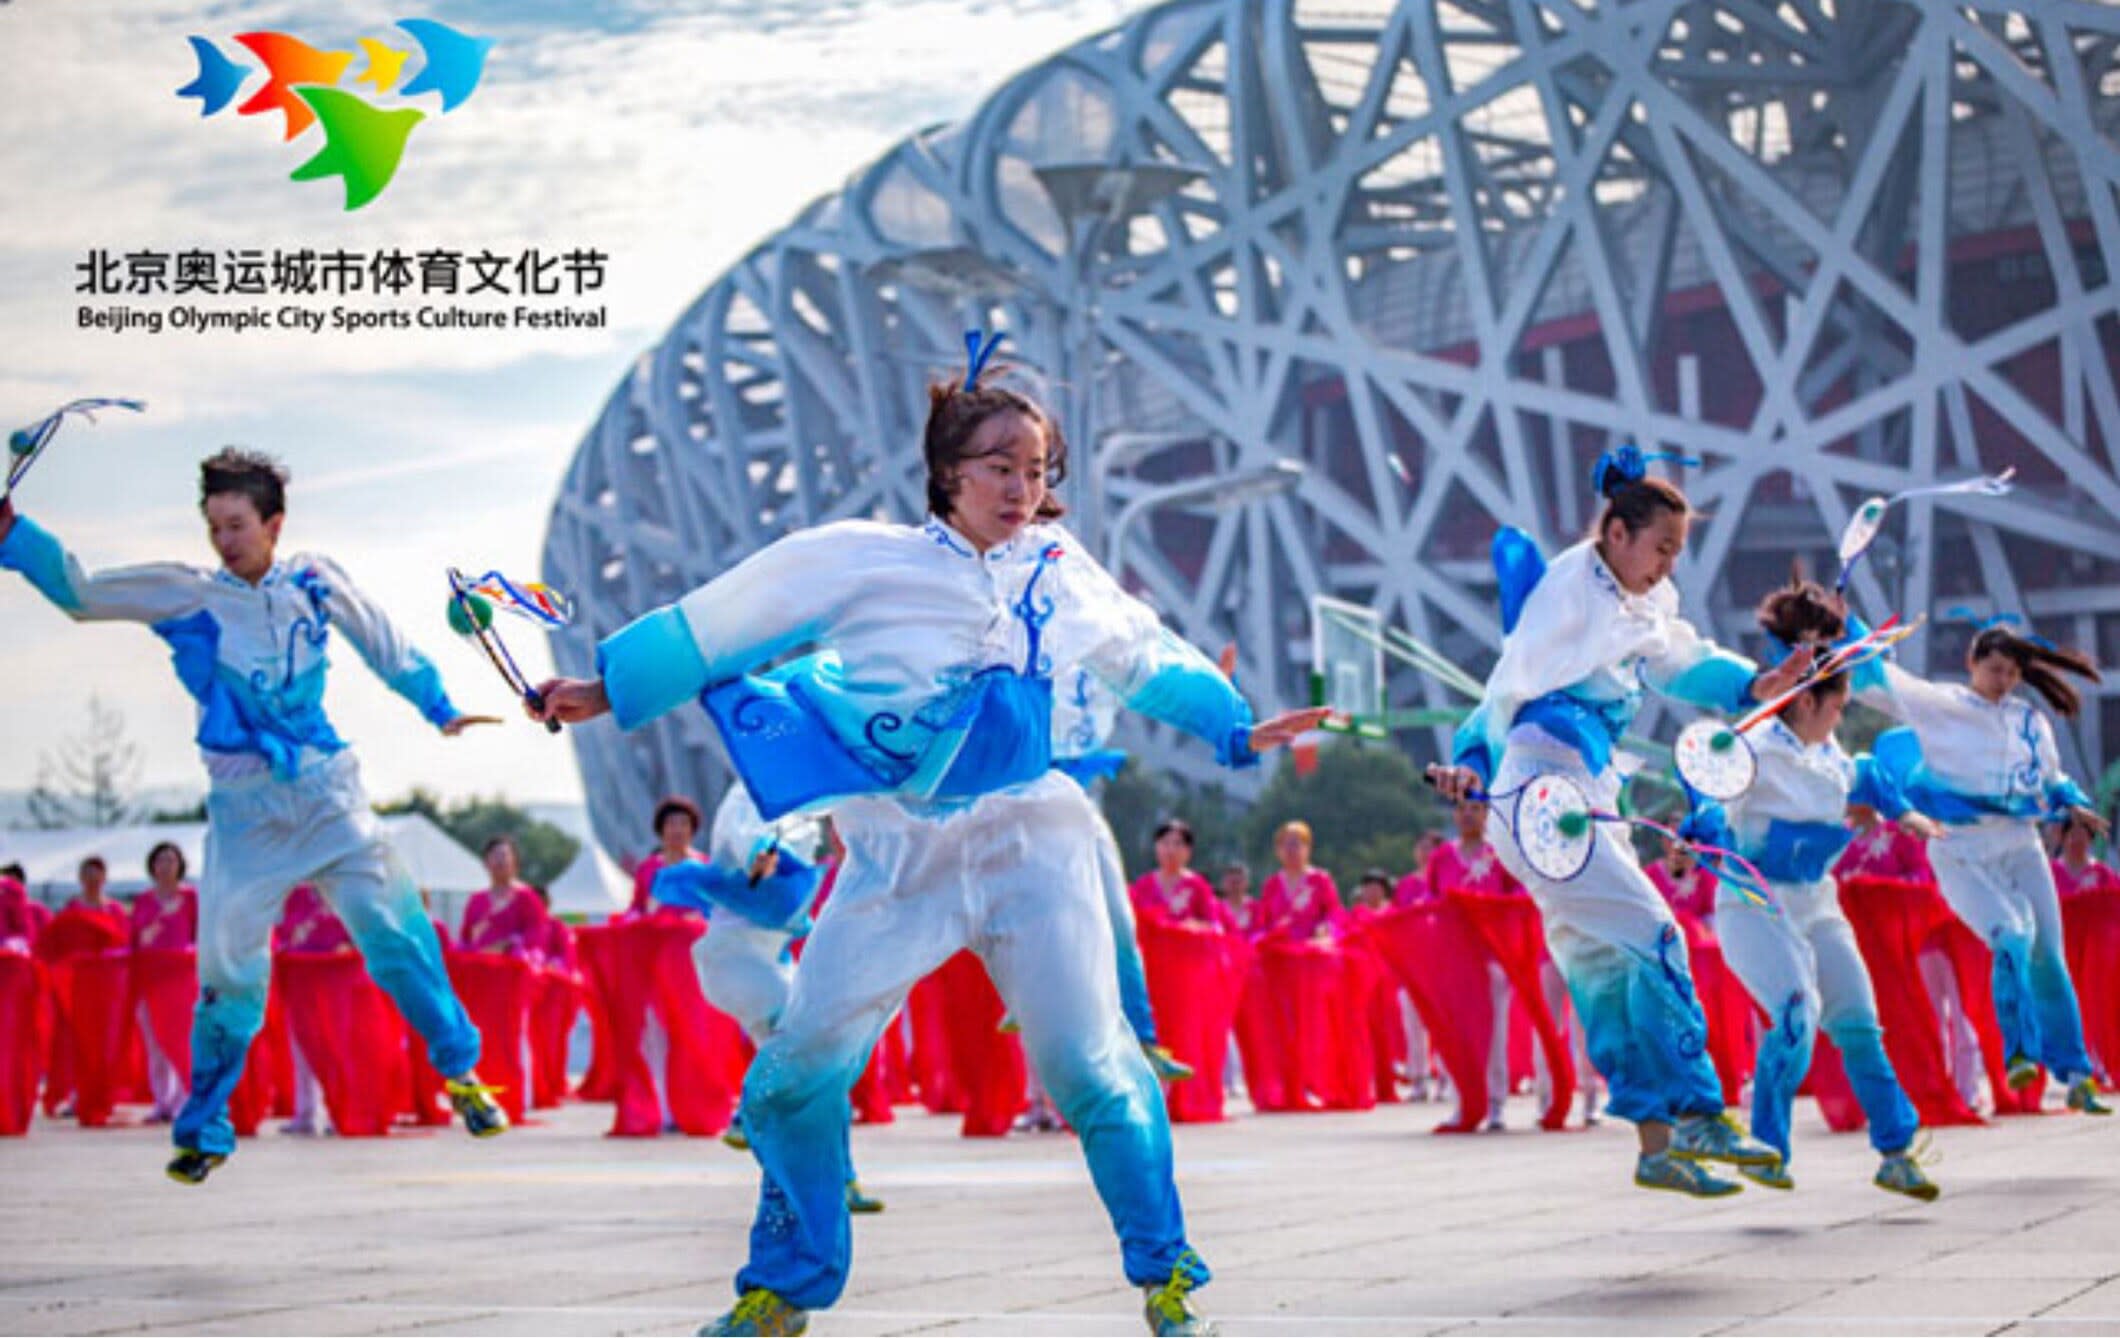 Beijing Olympic Development Association 